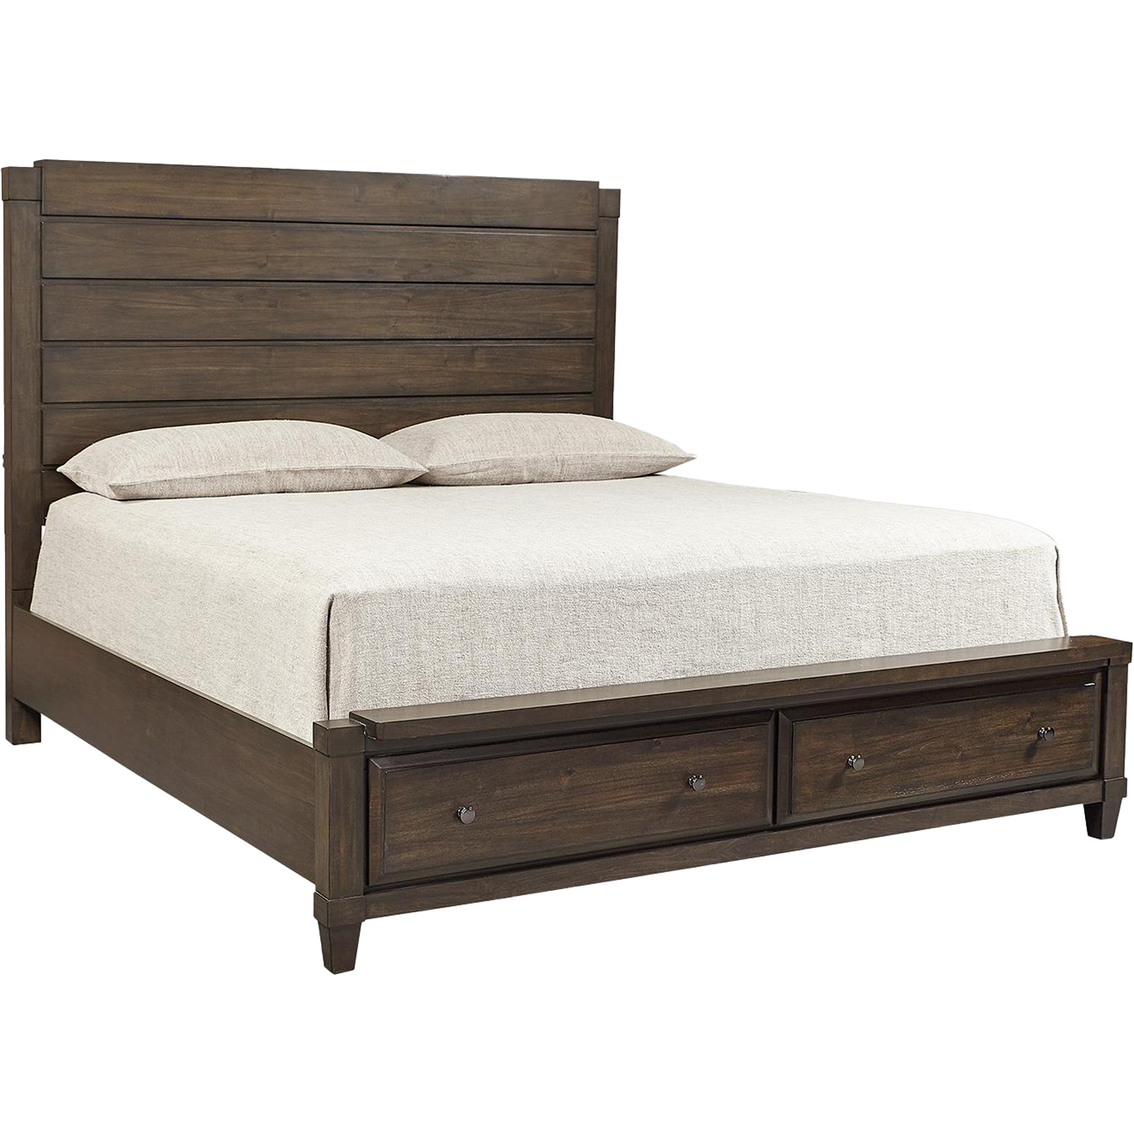 Aspenhome Easton Panel Storage Bed | Beds | Furniture & Appliances ...